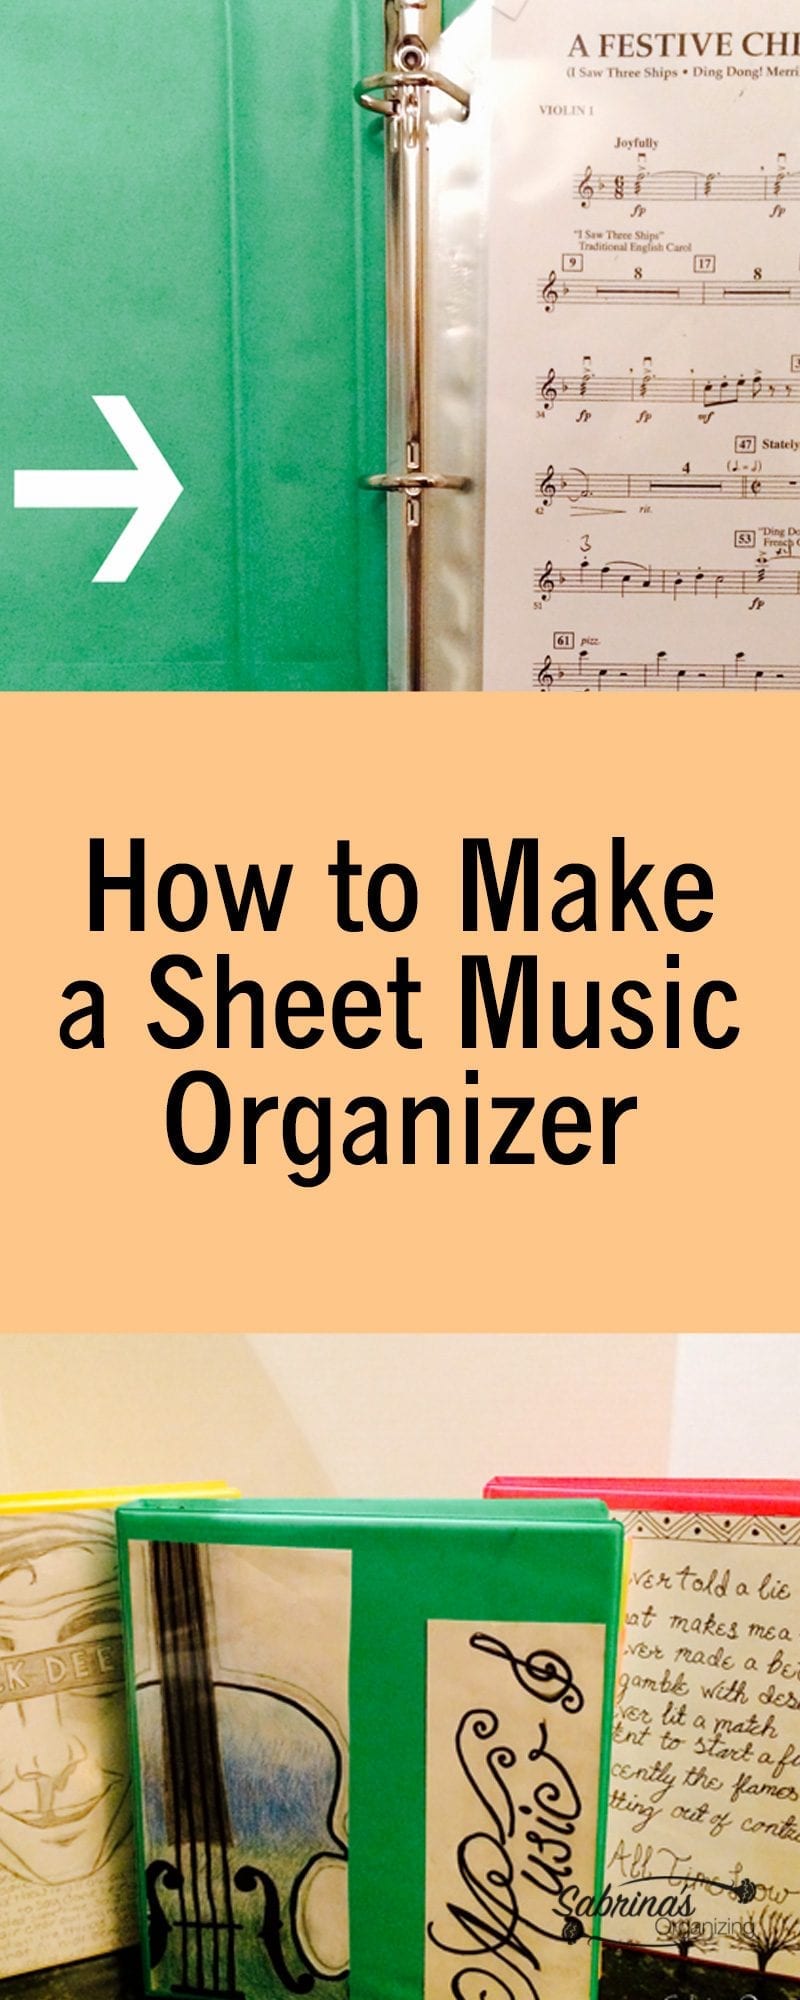 How to Make a Sheet Music Organizer